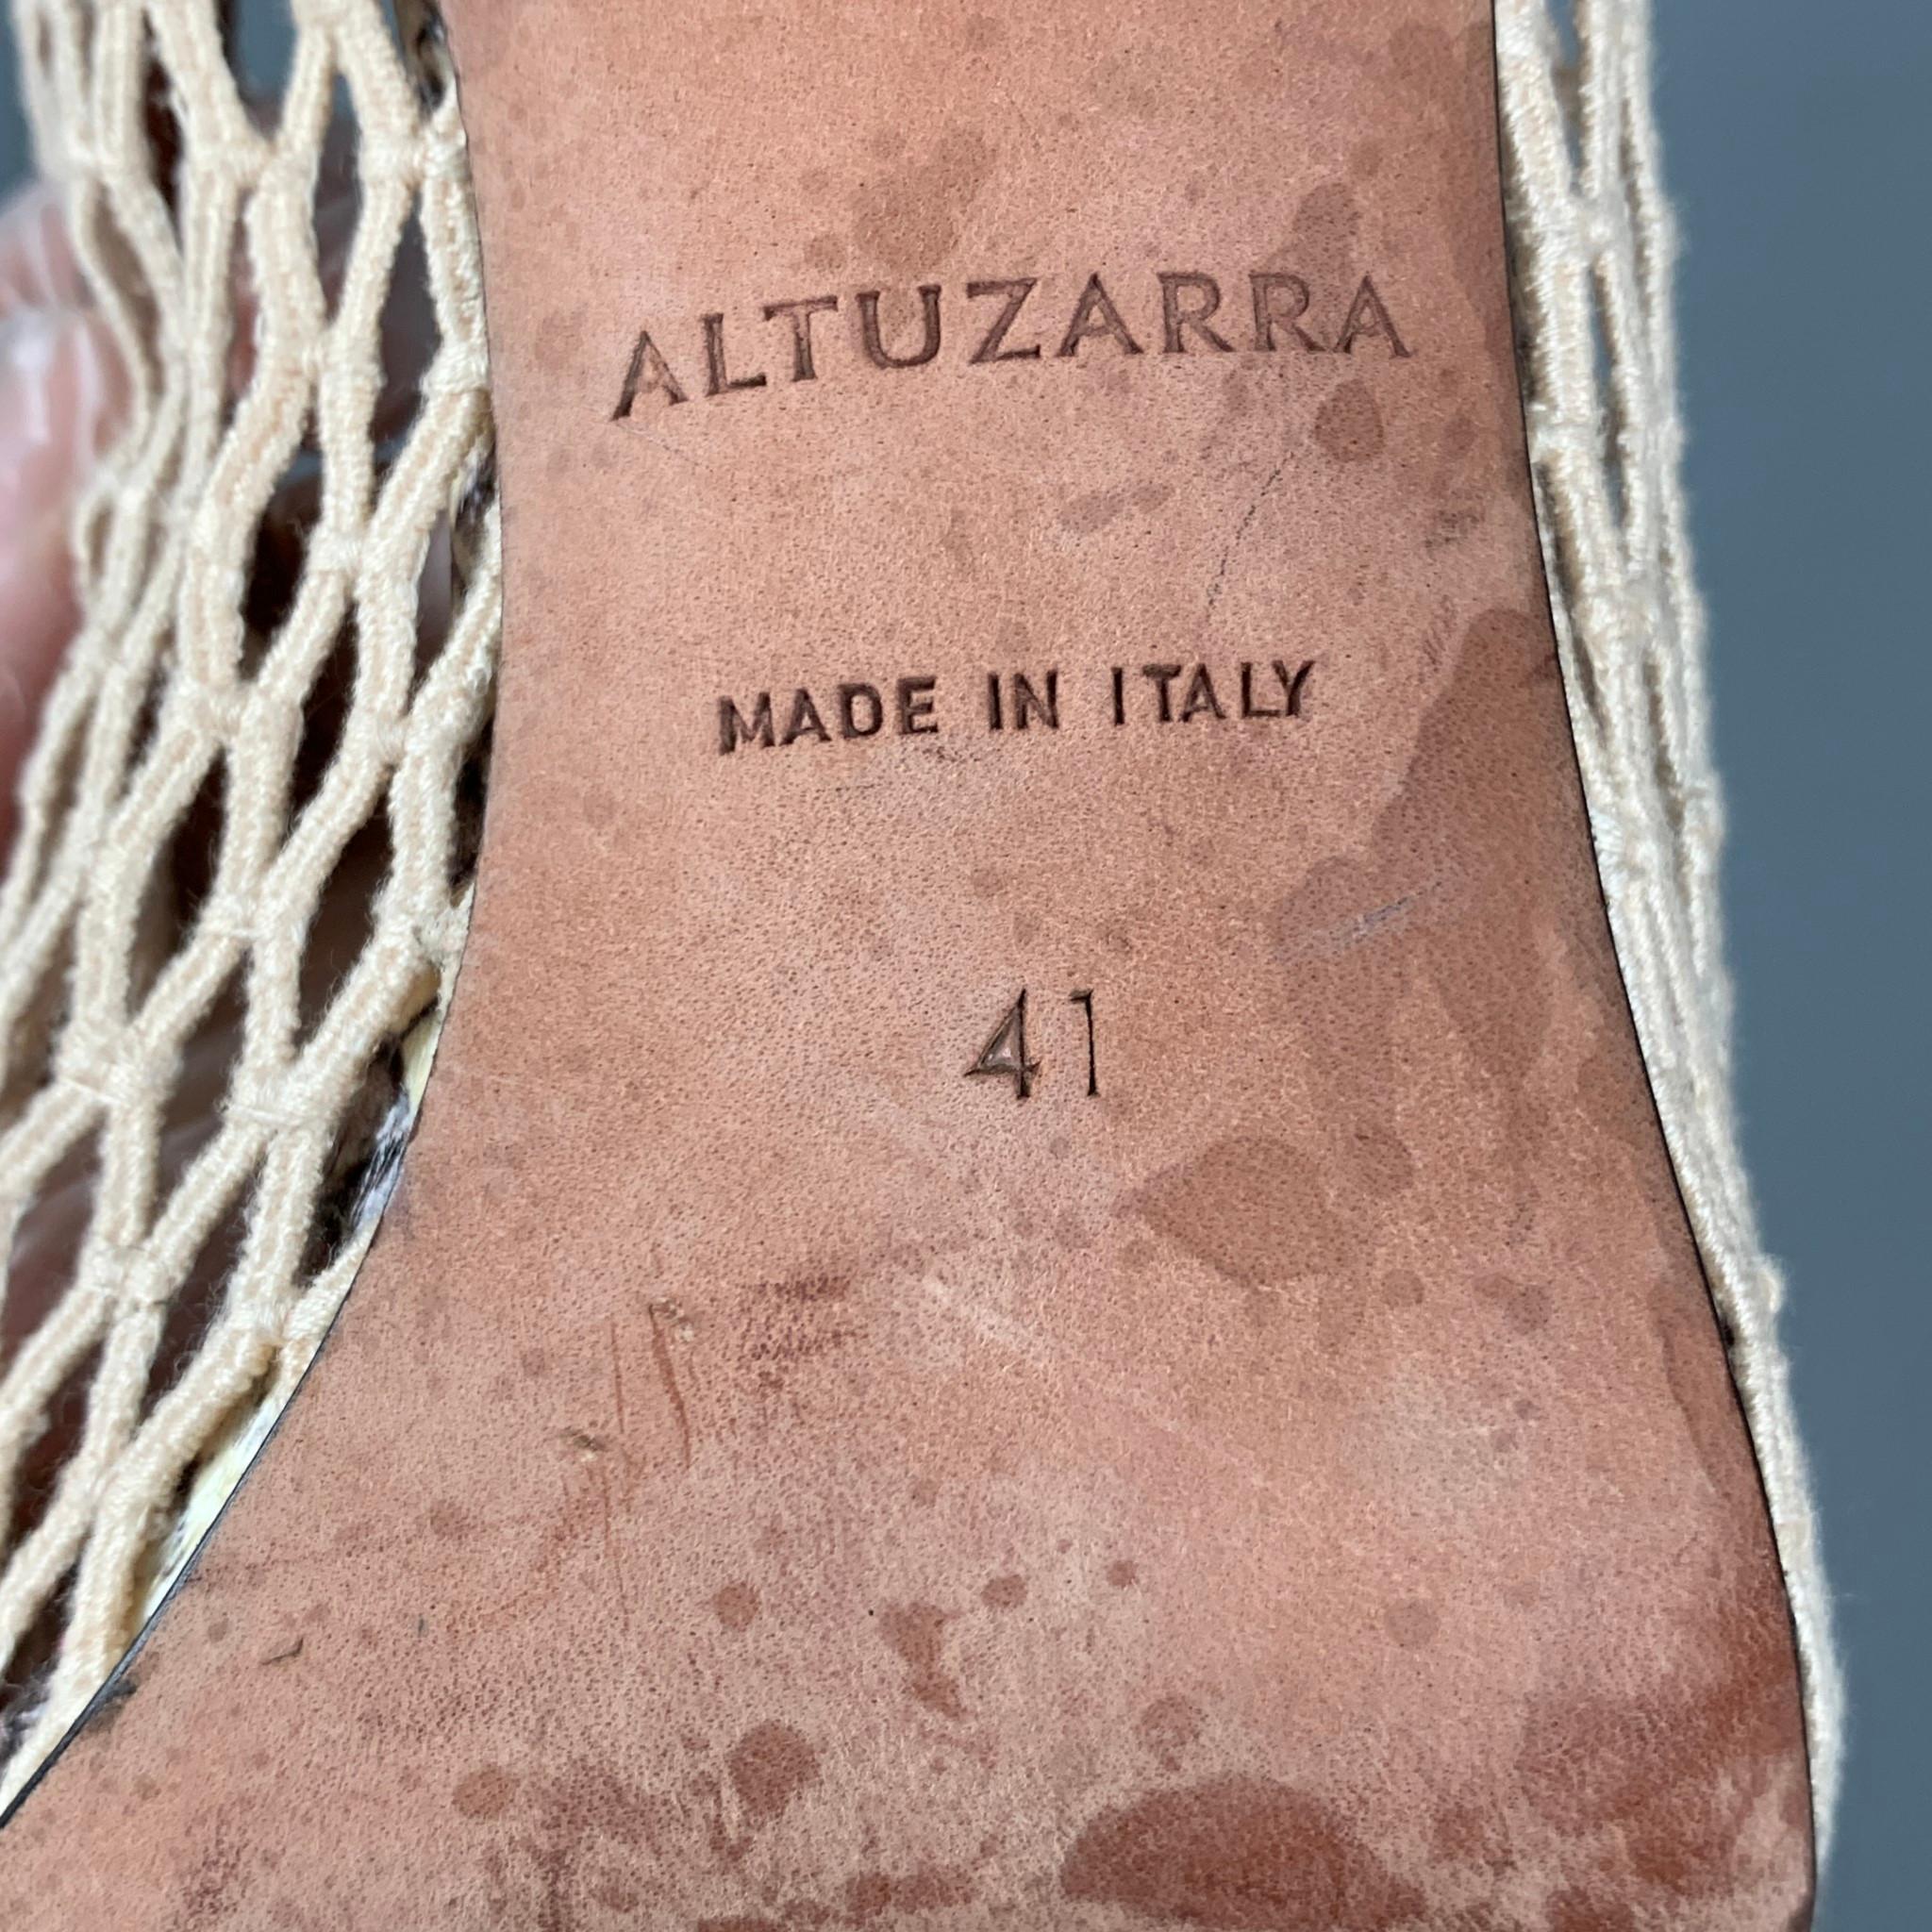 ALTUZARRA Size 11 Beige Brown Leather Embossed Snake Skin Pumps 5